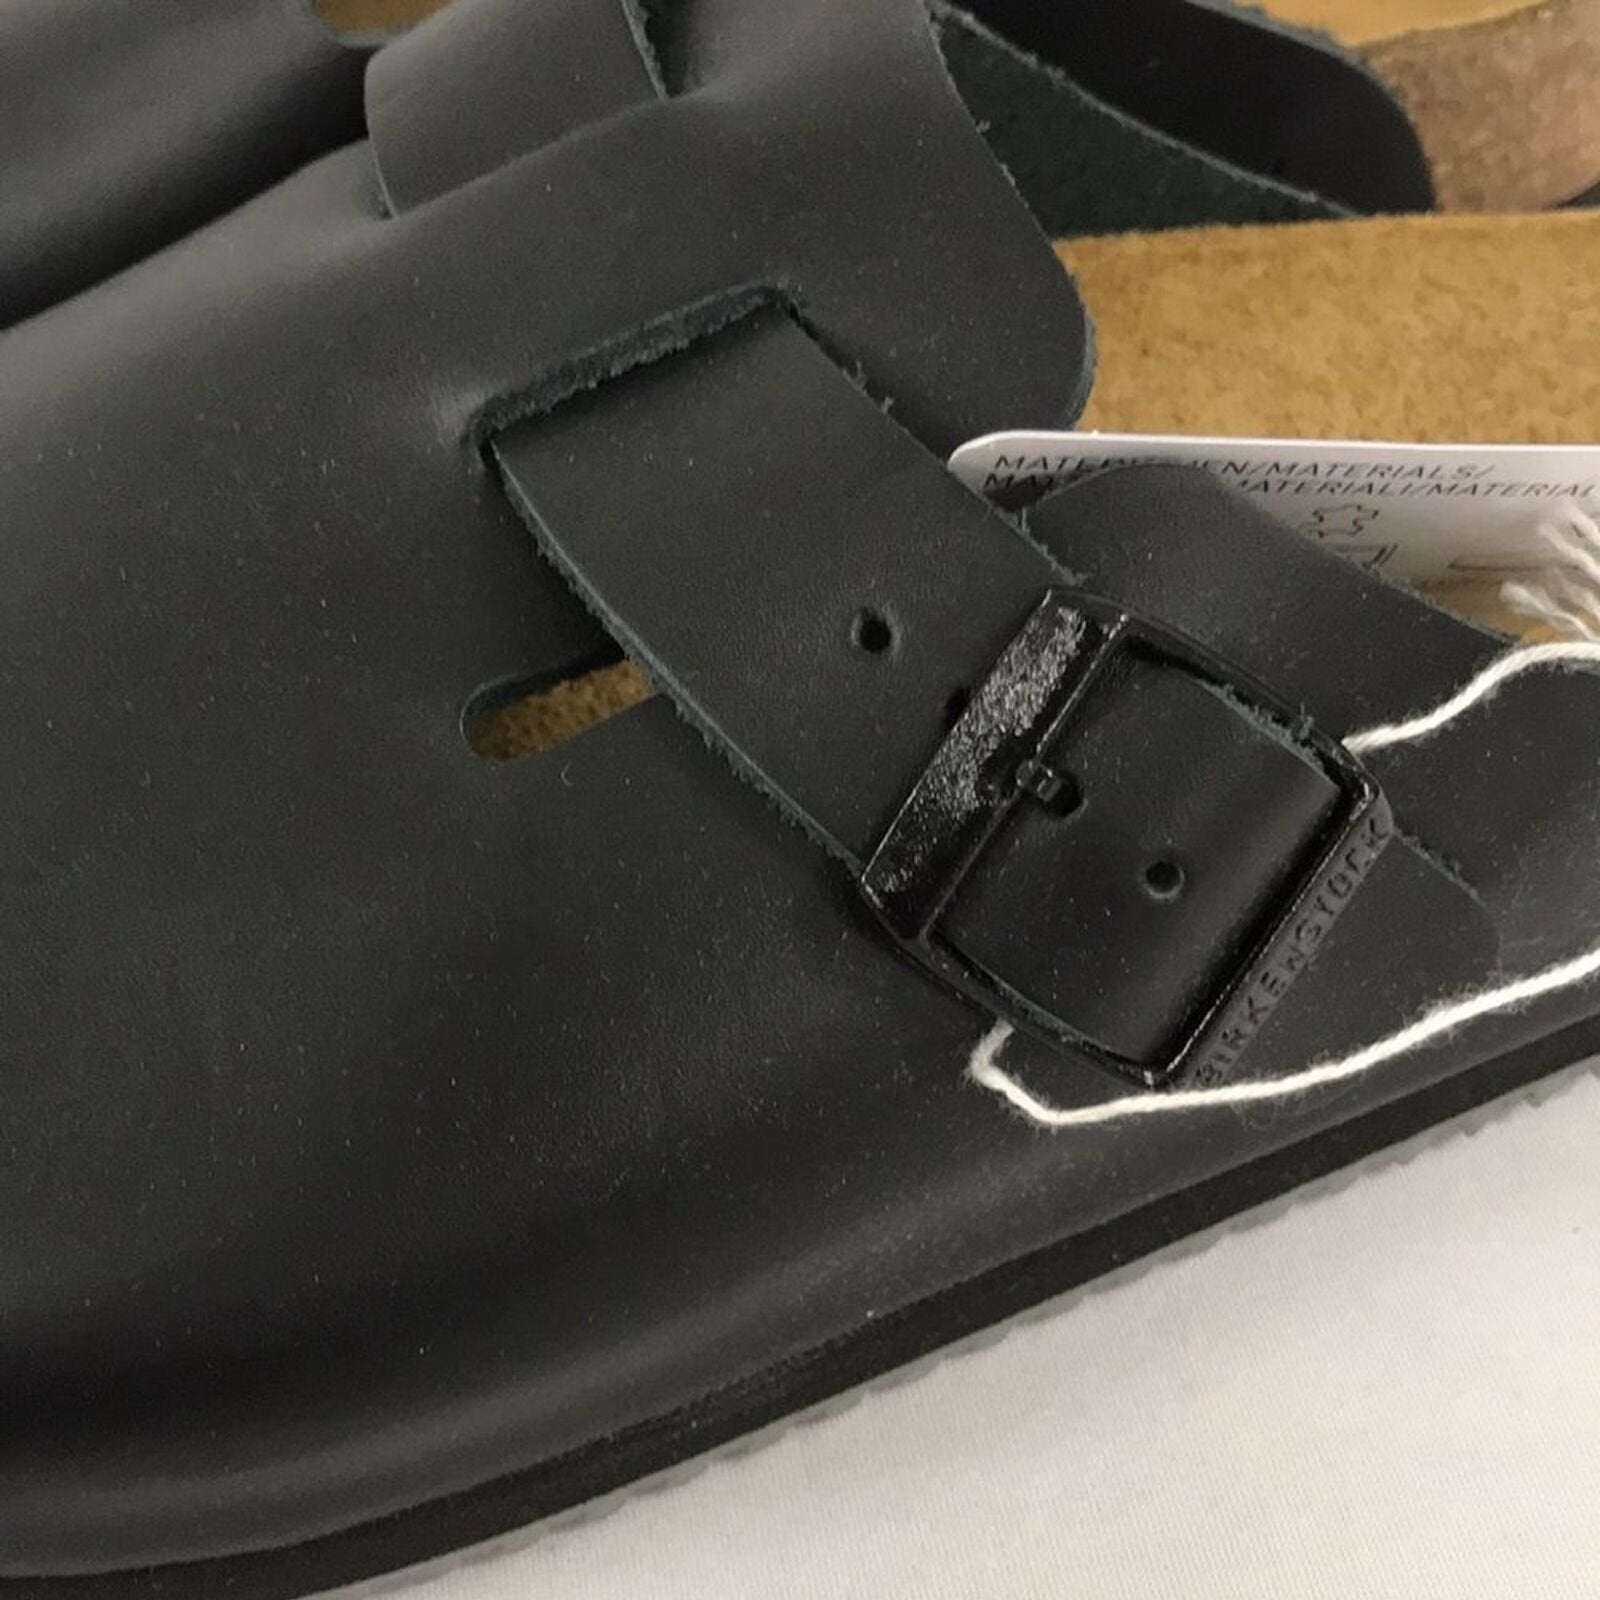 Birkenstock Professional Boston Super Grip Leather Slip Resistant Black 6 US